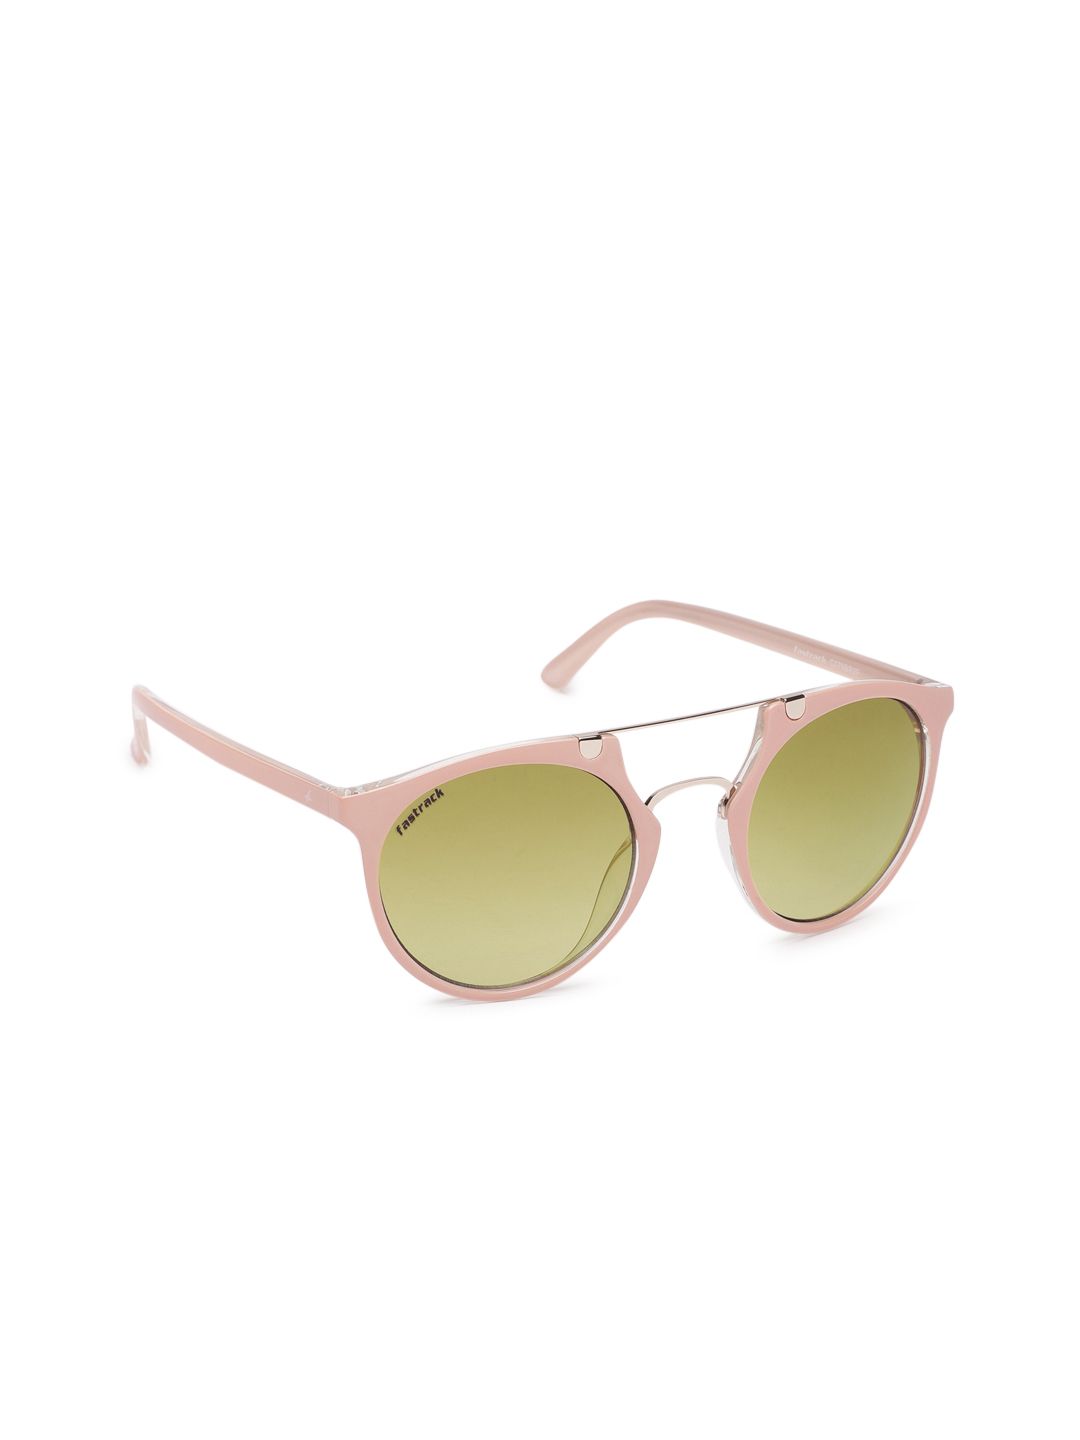 Fastrack Women Round Sunglasses C066BR2F Price in India